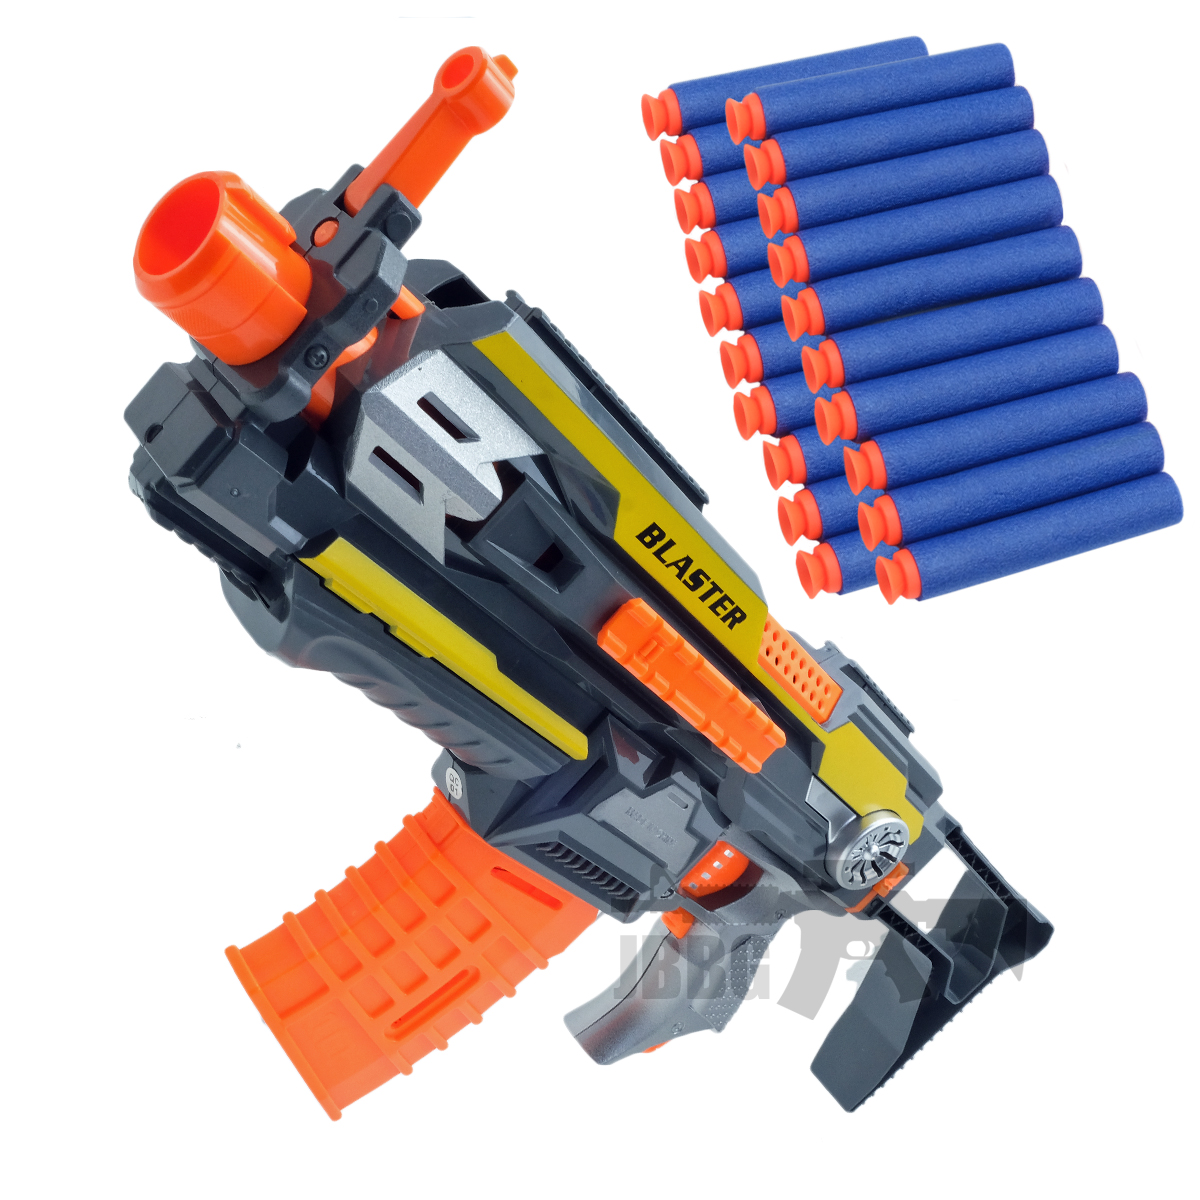 Projectile Launcher Foam Dart Blaster Shot Gun